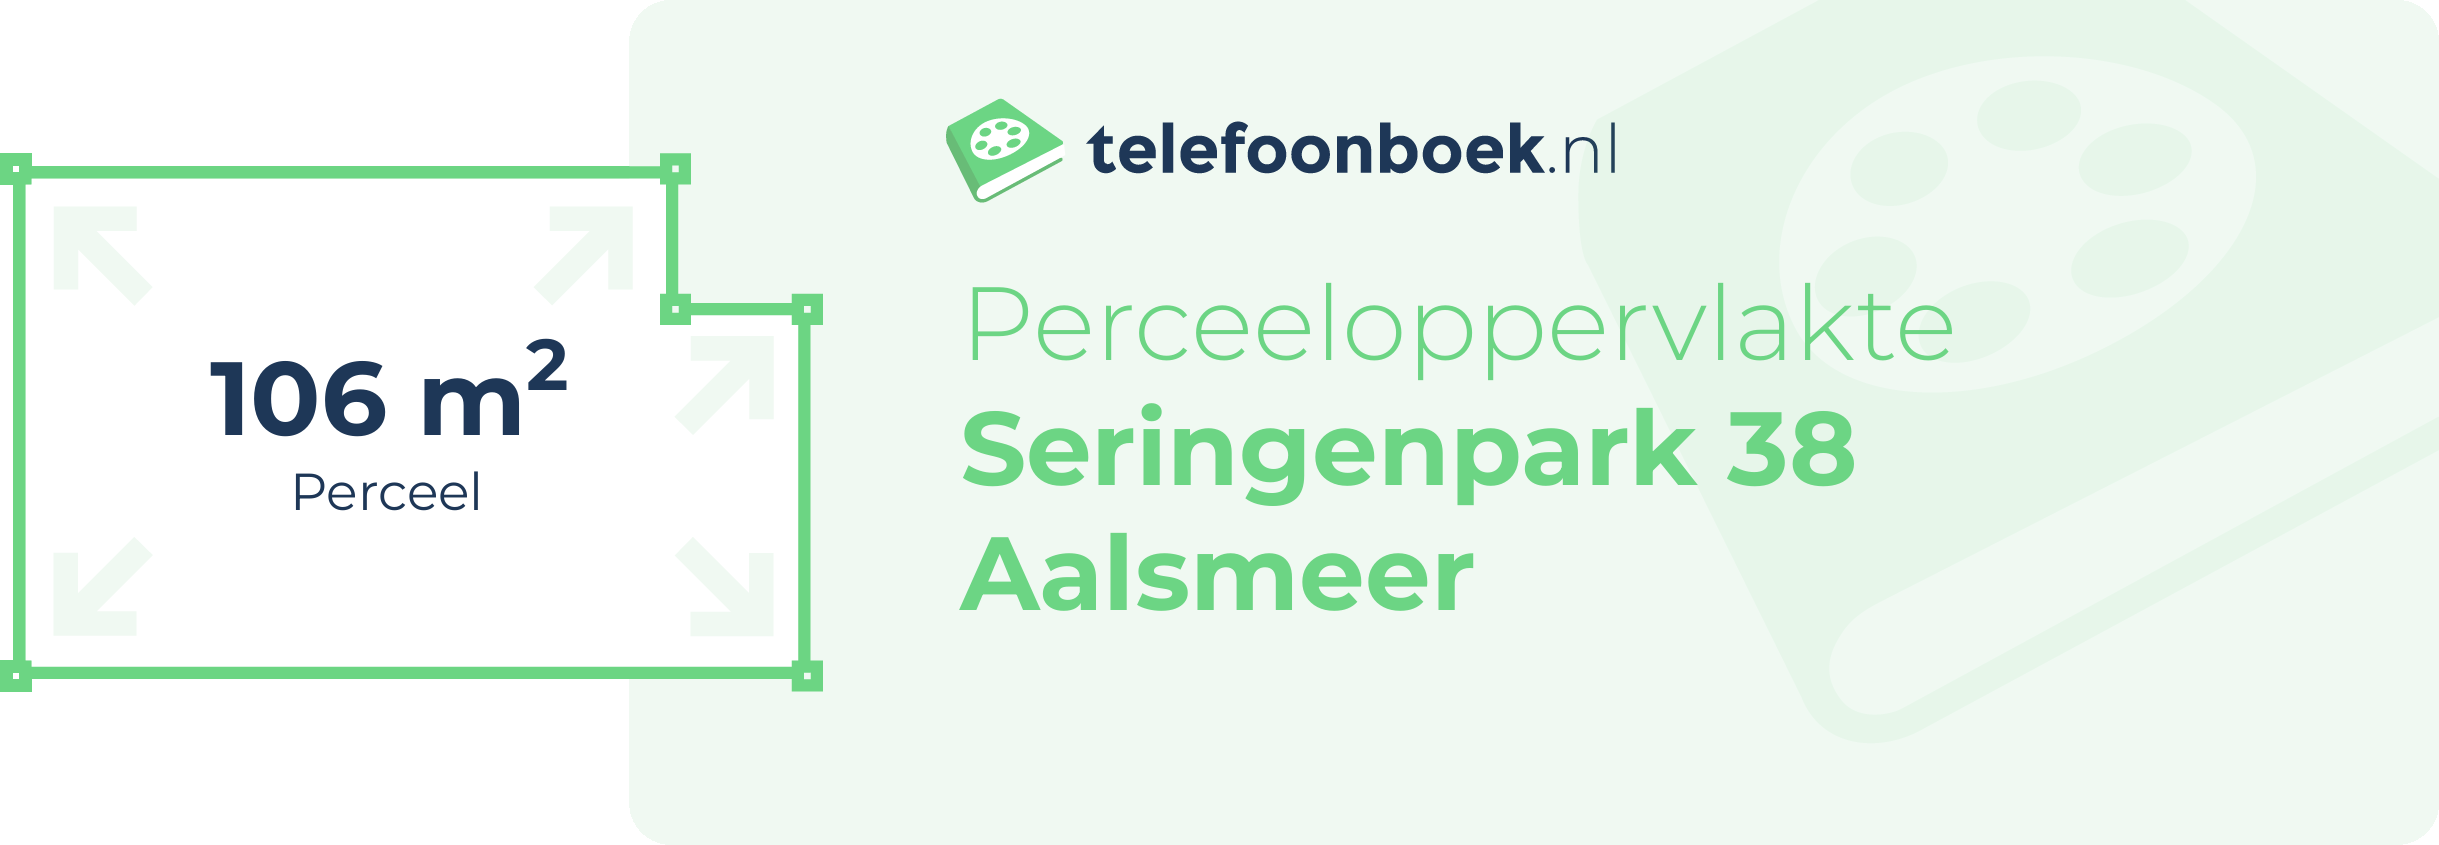 Perceeloppervlakte Seringenpark 38 Aalsmeer